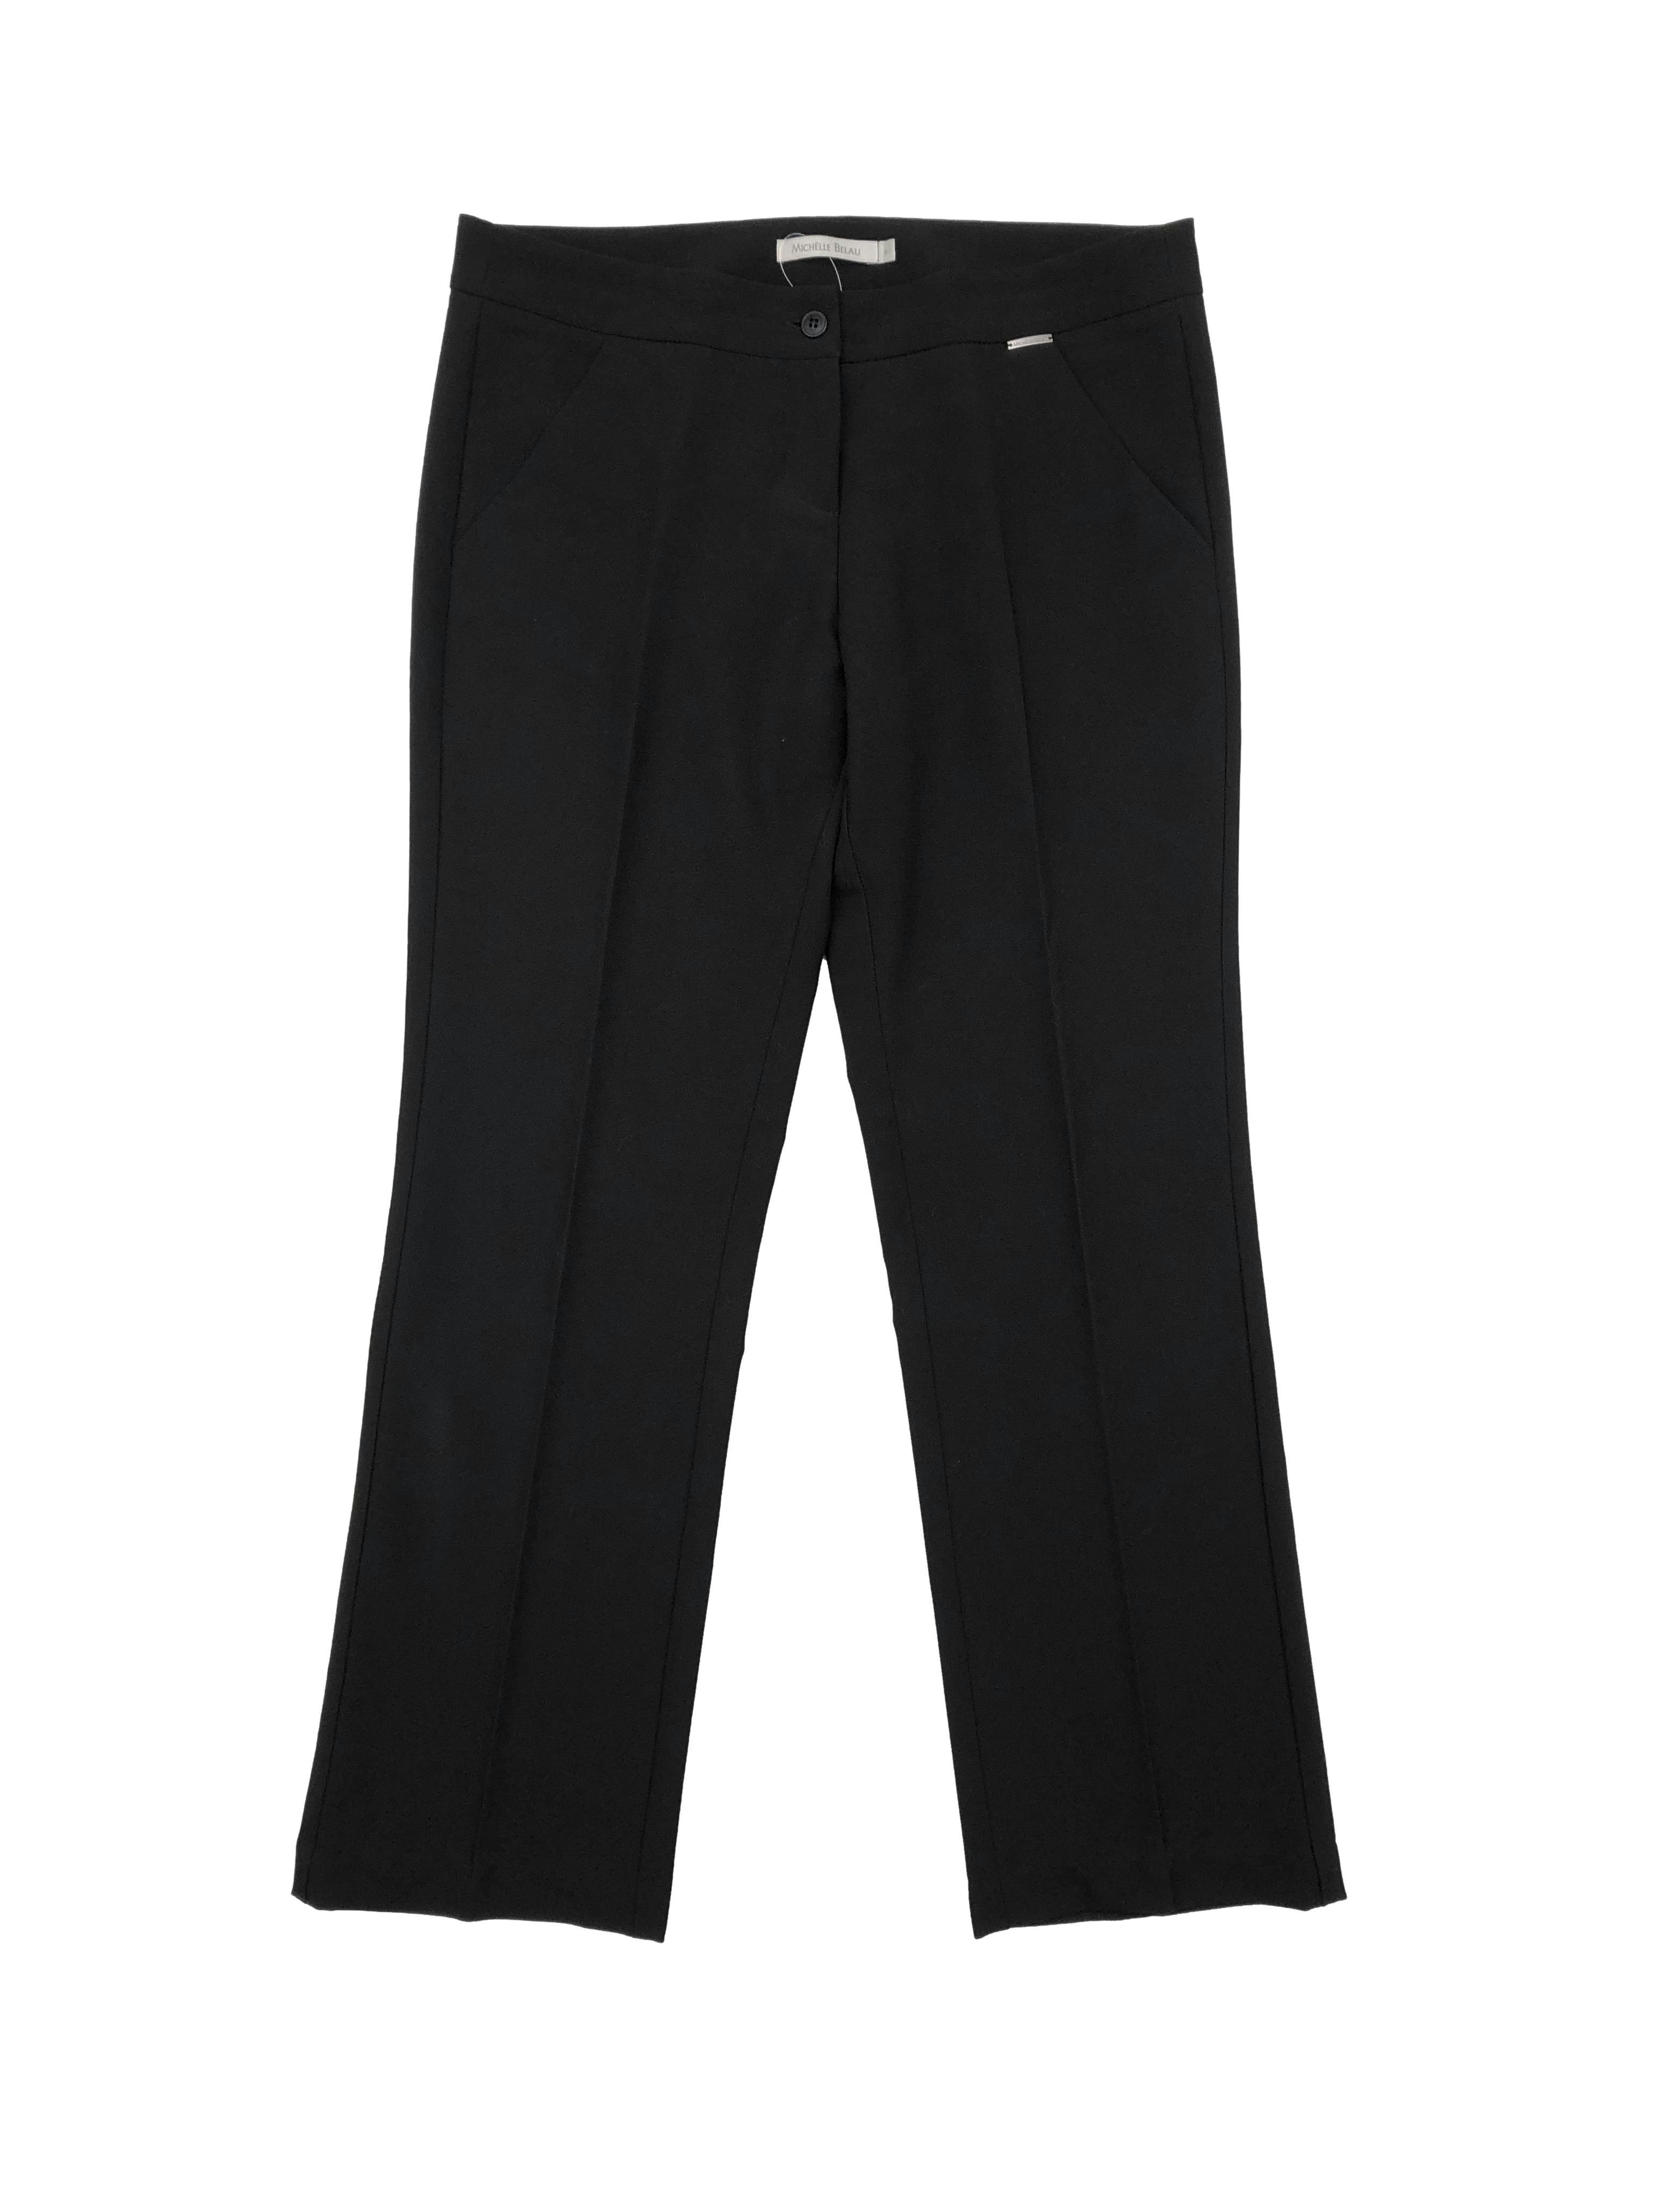 Pantalón negro Michèlle Belau, corte recto con bolsillos laterales y pinzas posteriores. Tiro 23cm, Cintura 84cm, Largo 97cm.